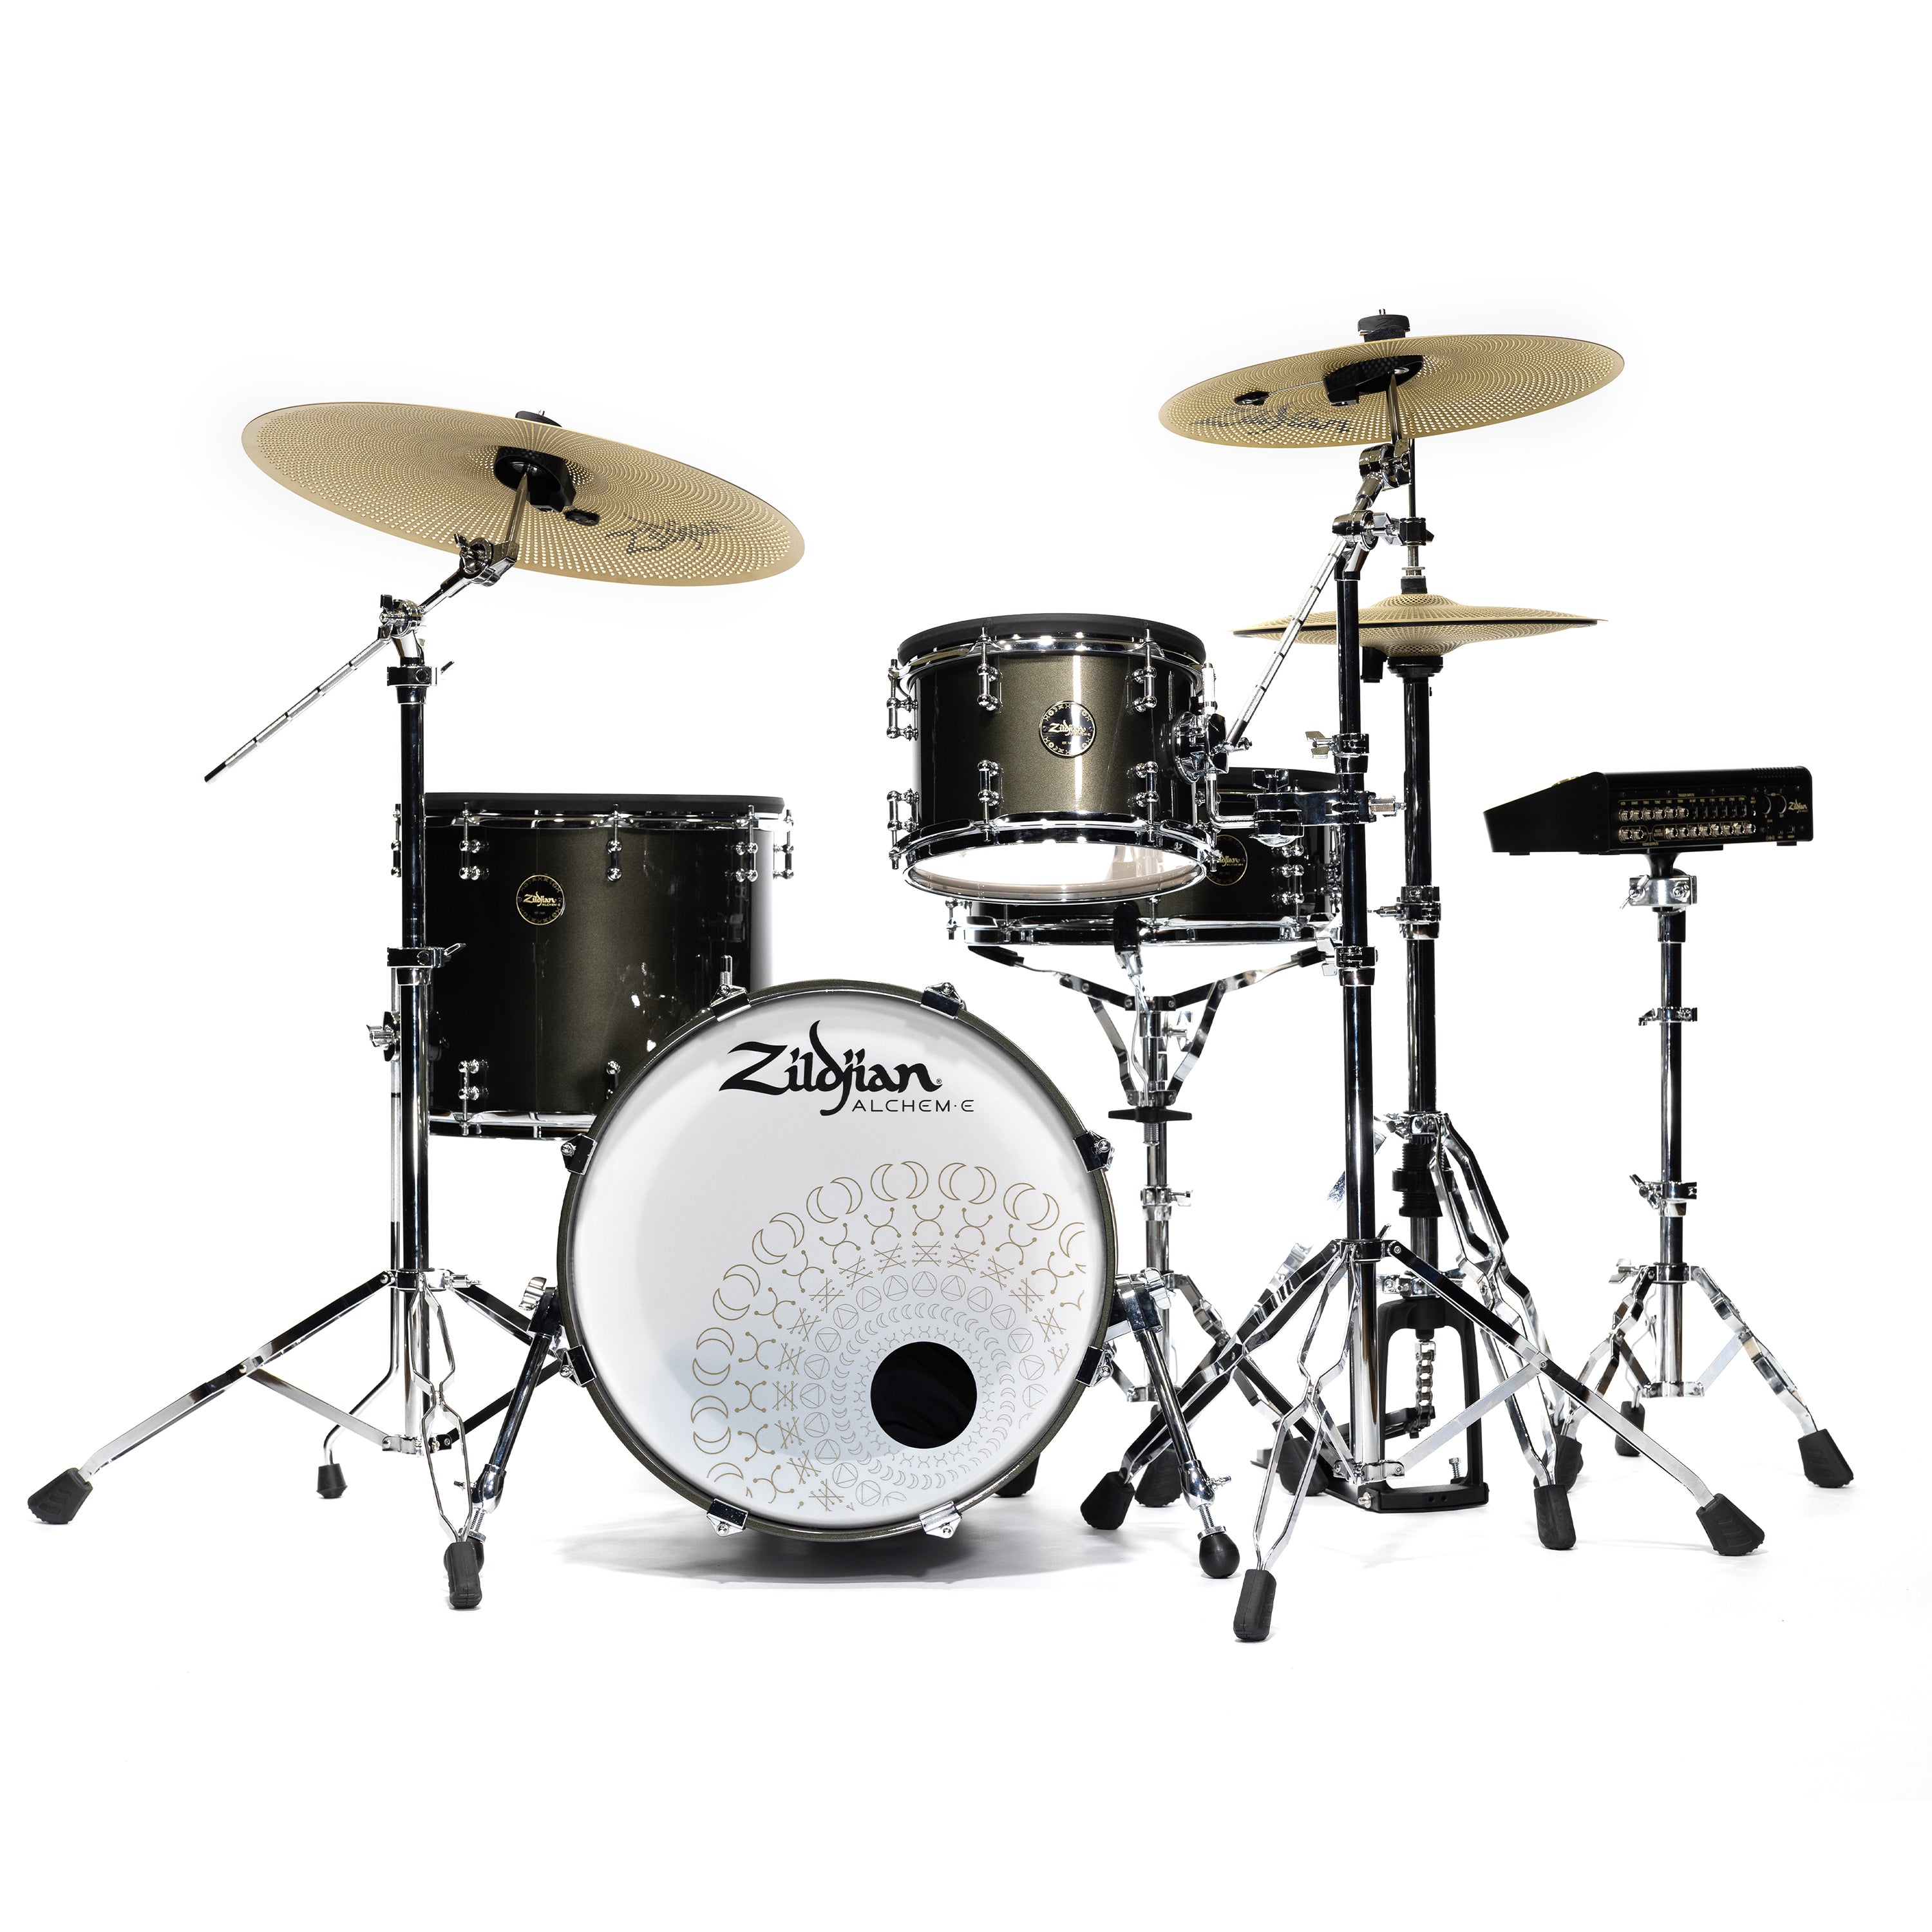 Zildjian ALCHEM-E Gold Electronic Drum Kit, View 2